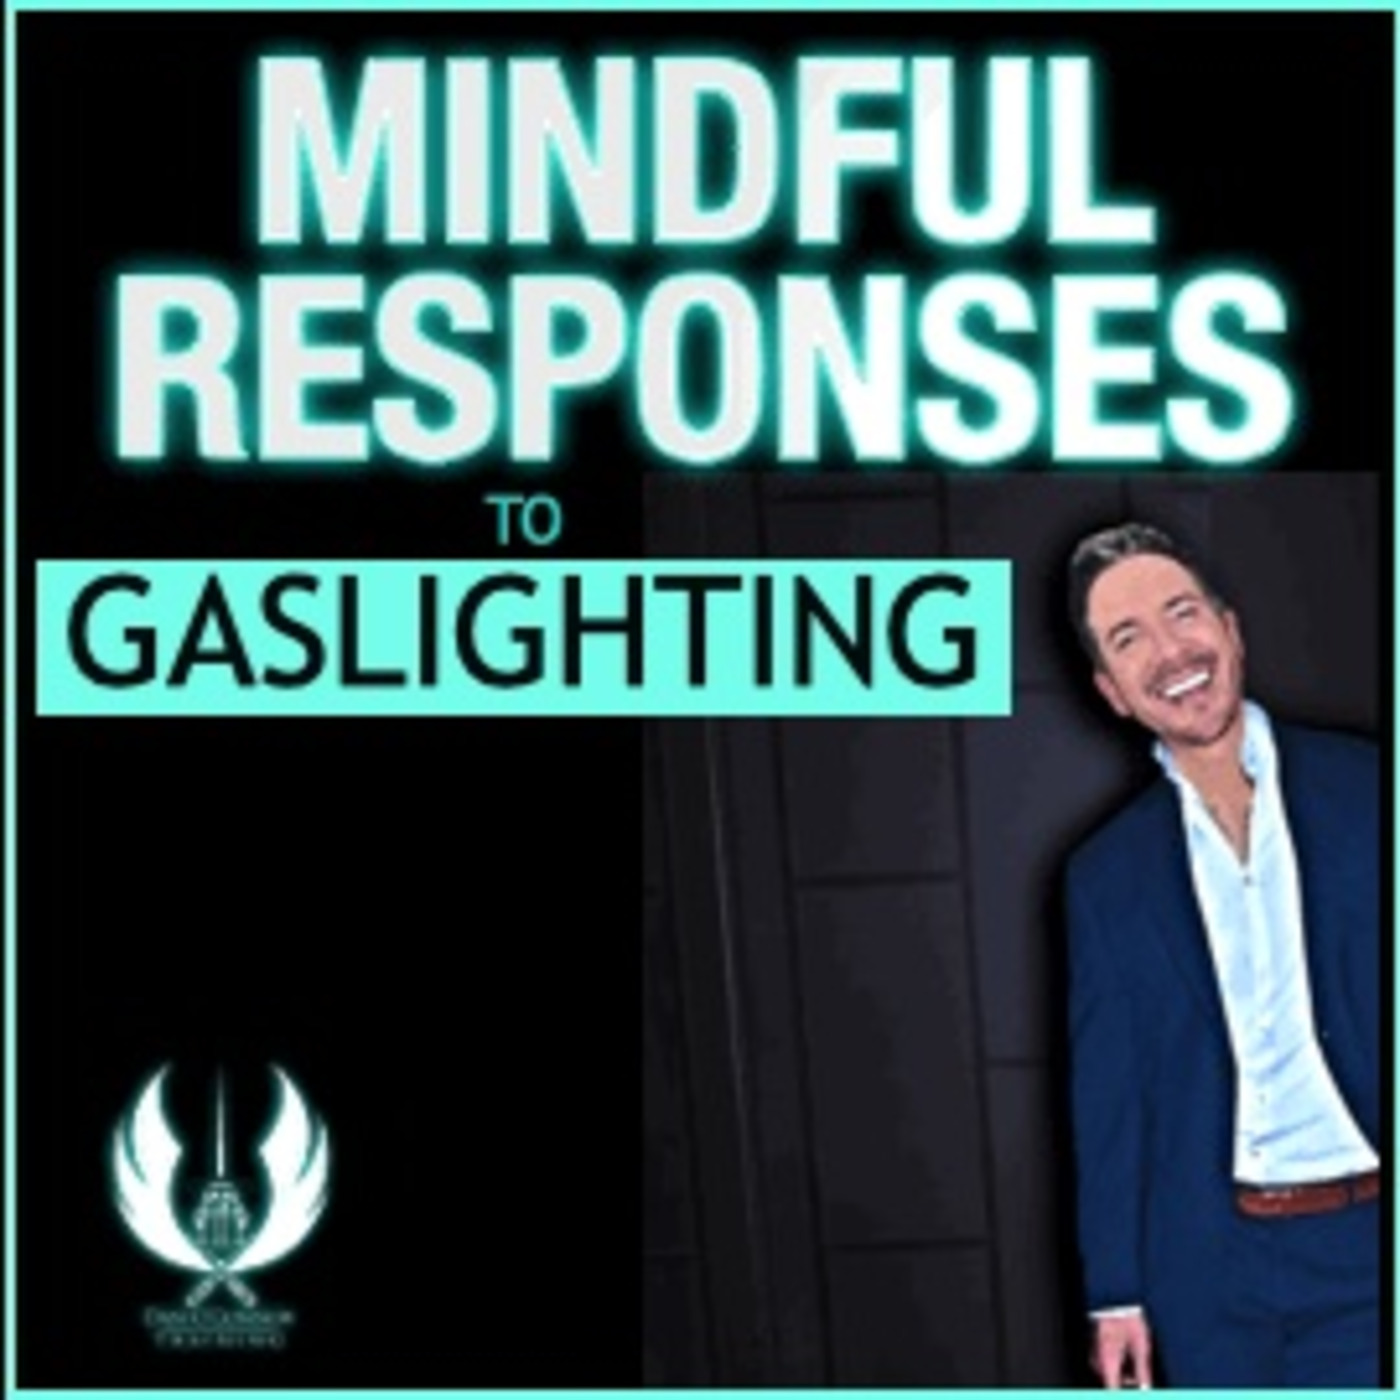 Episode 2: 4 Mindful Responses to Gaslighting